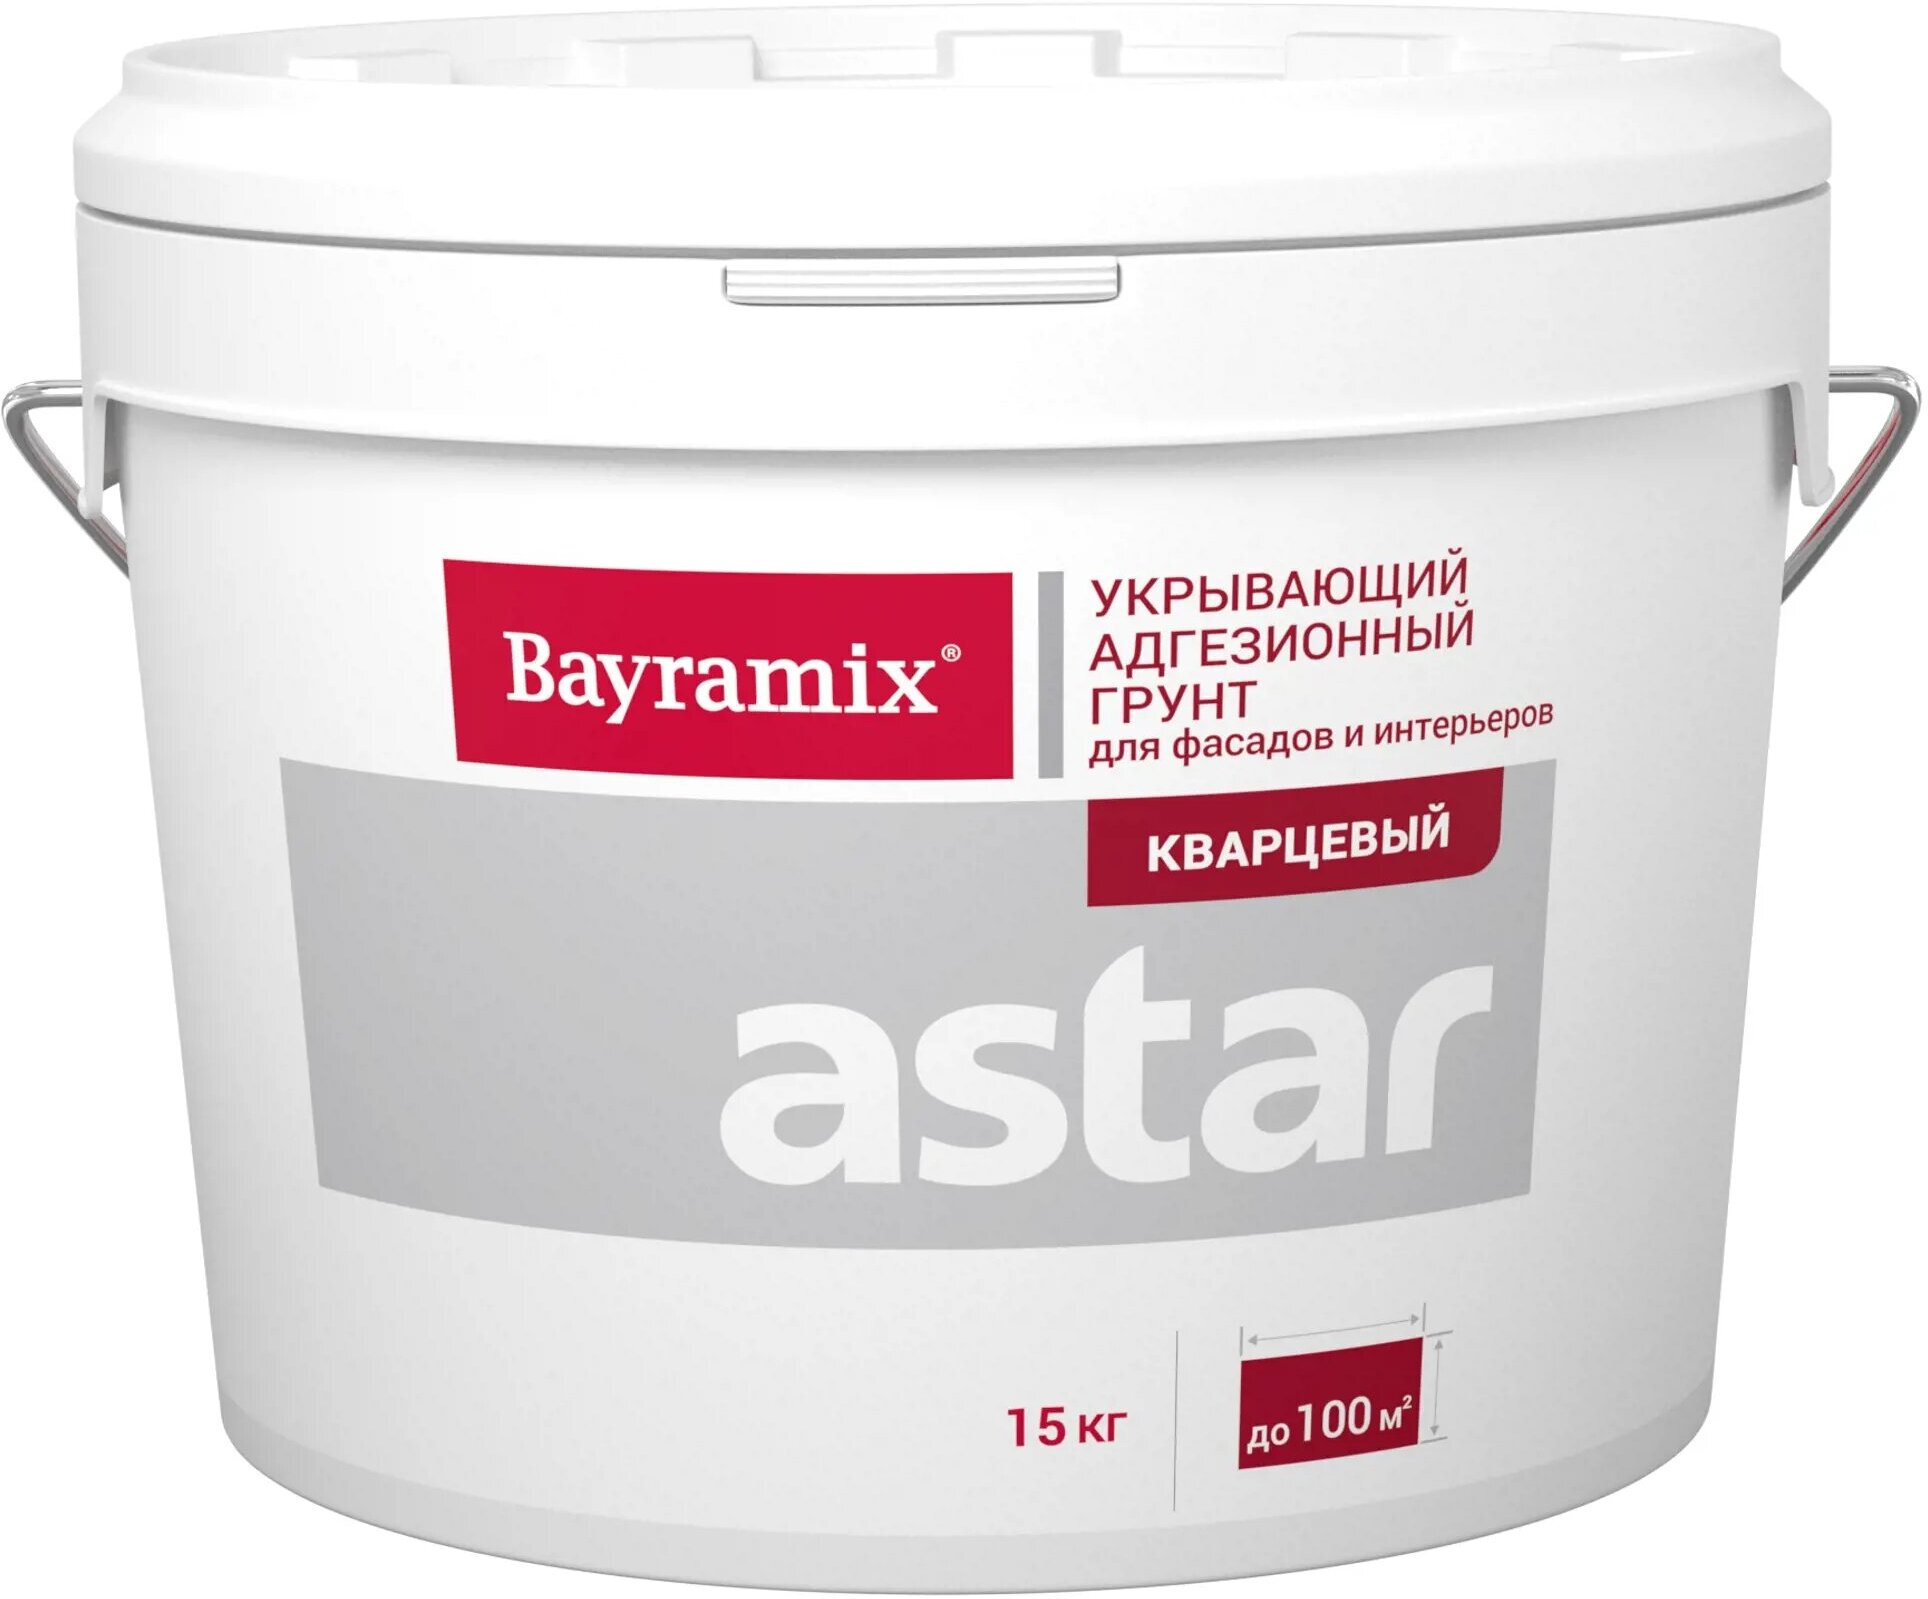 Грунт укрывающий адгезионный Bayramix Астар Кварцевый (15кг) белый